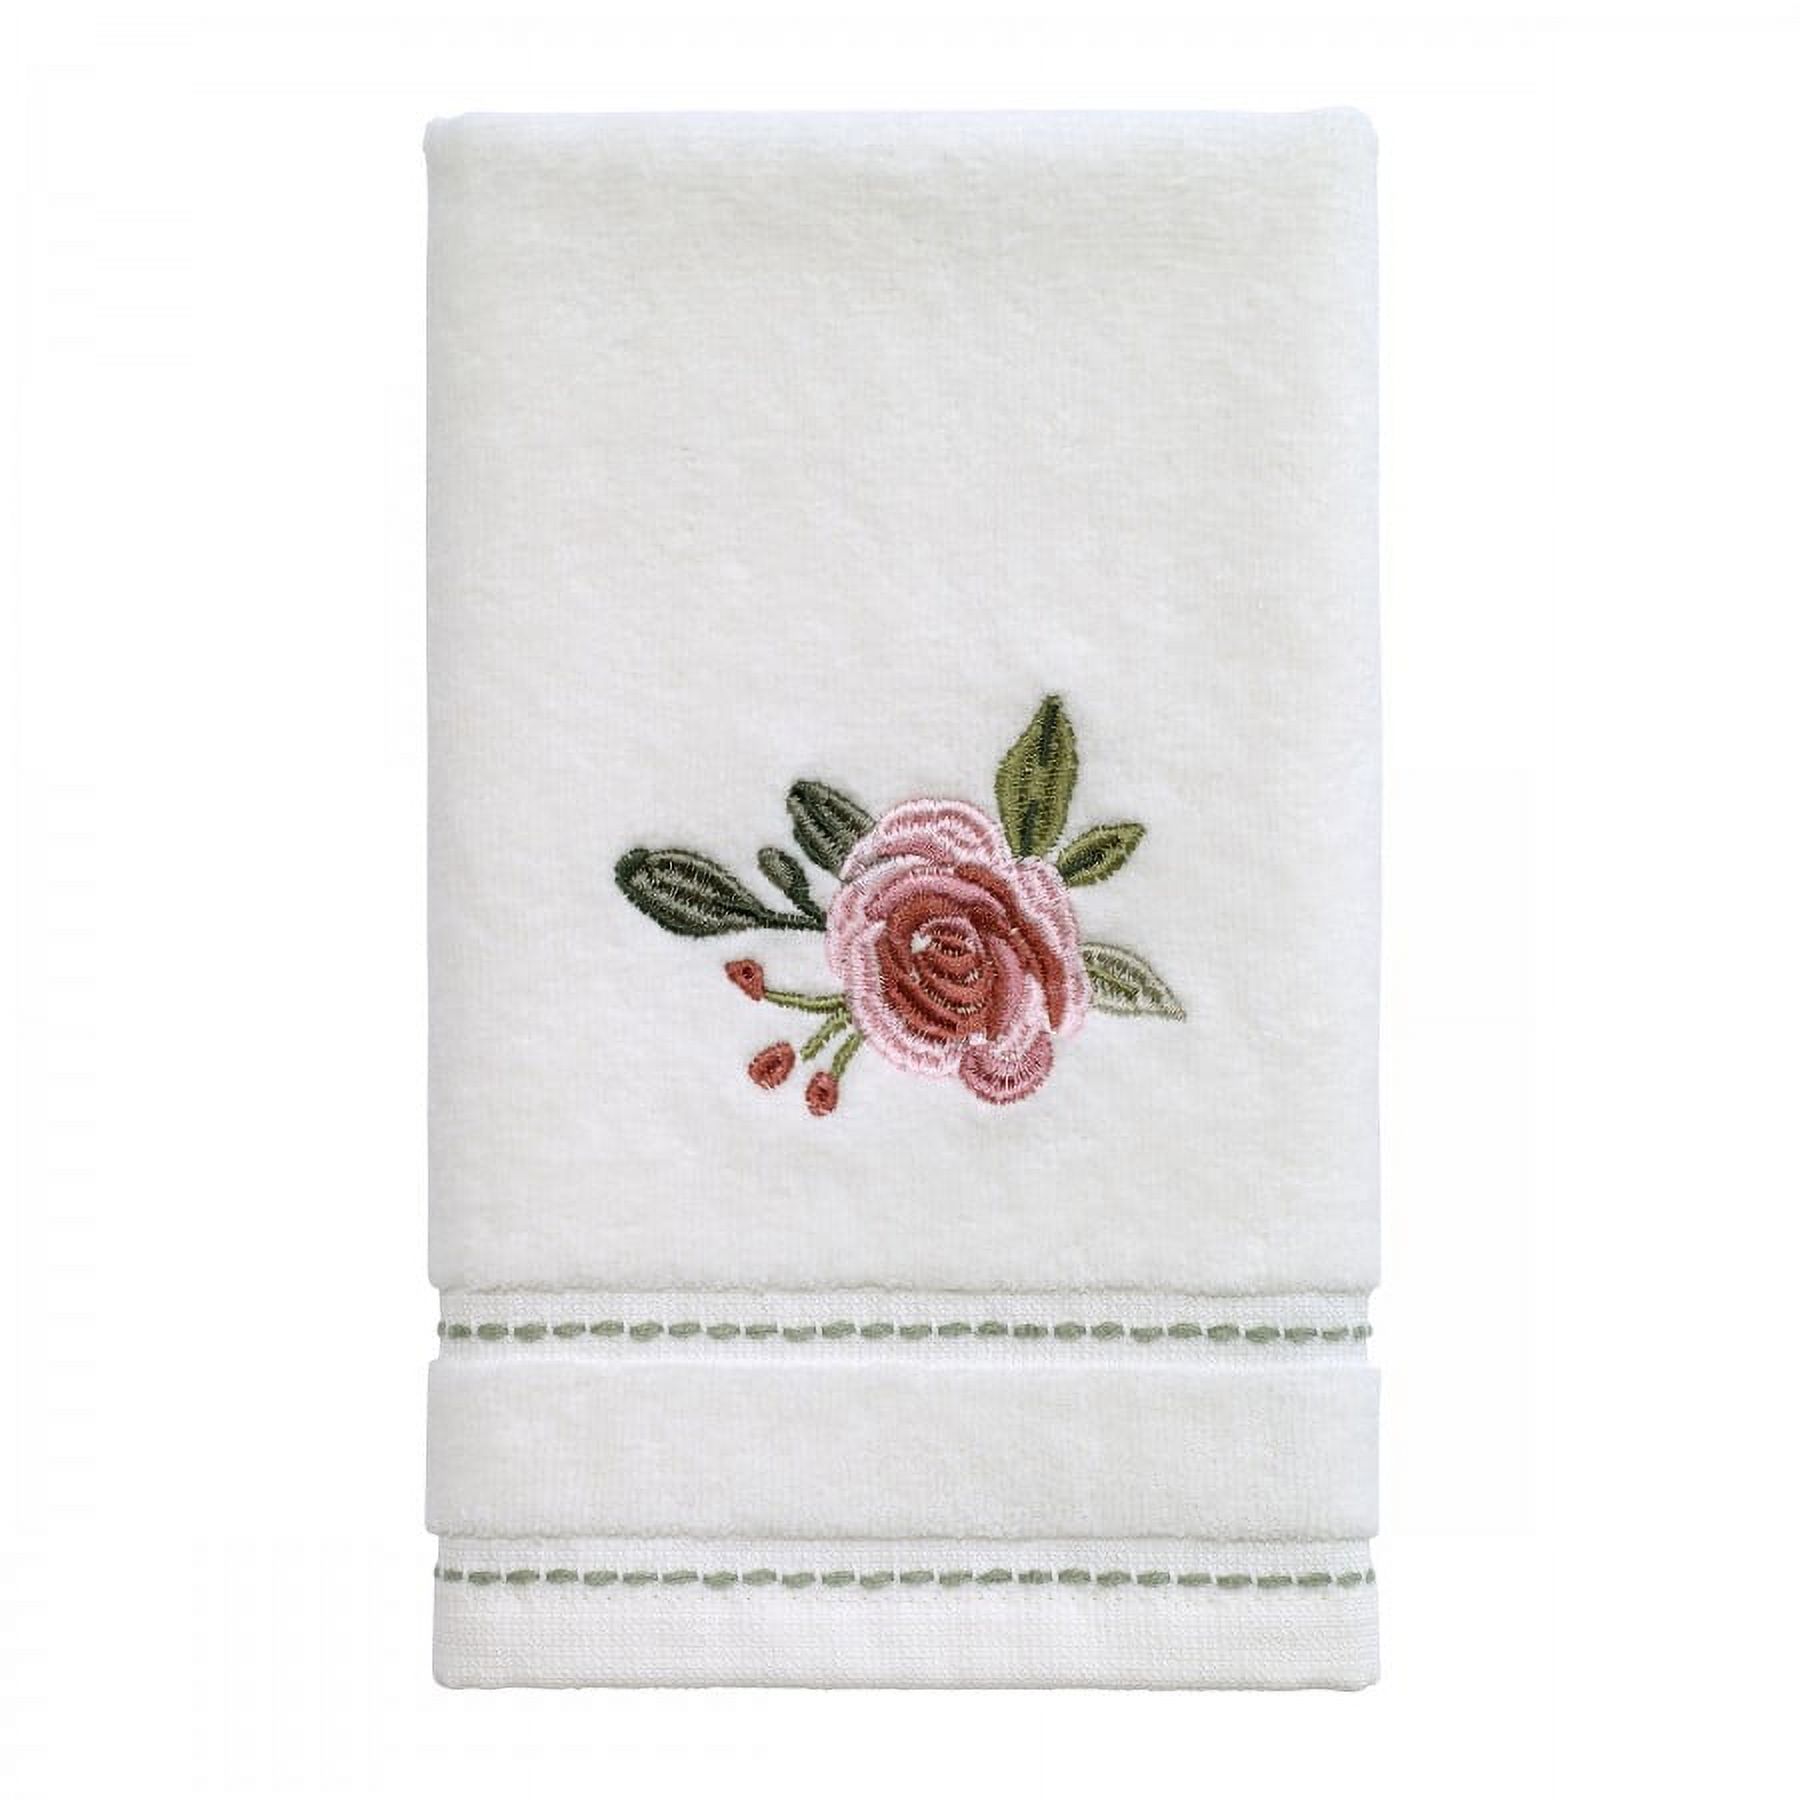 Avanti Spring Garden Fingertip Towel - image 1 of 5